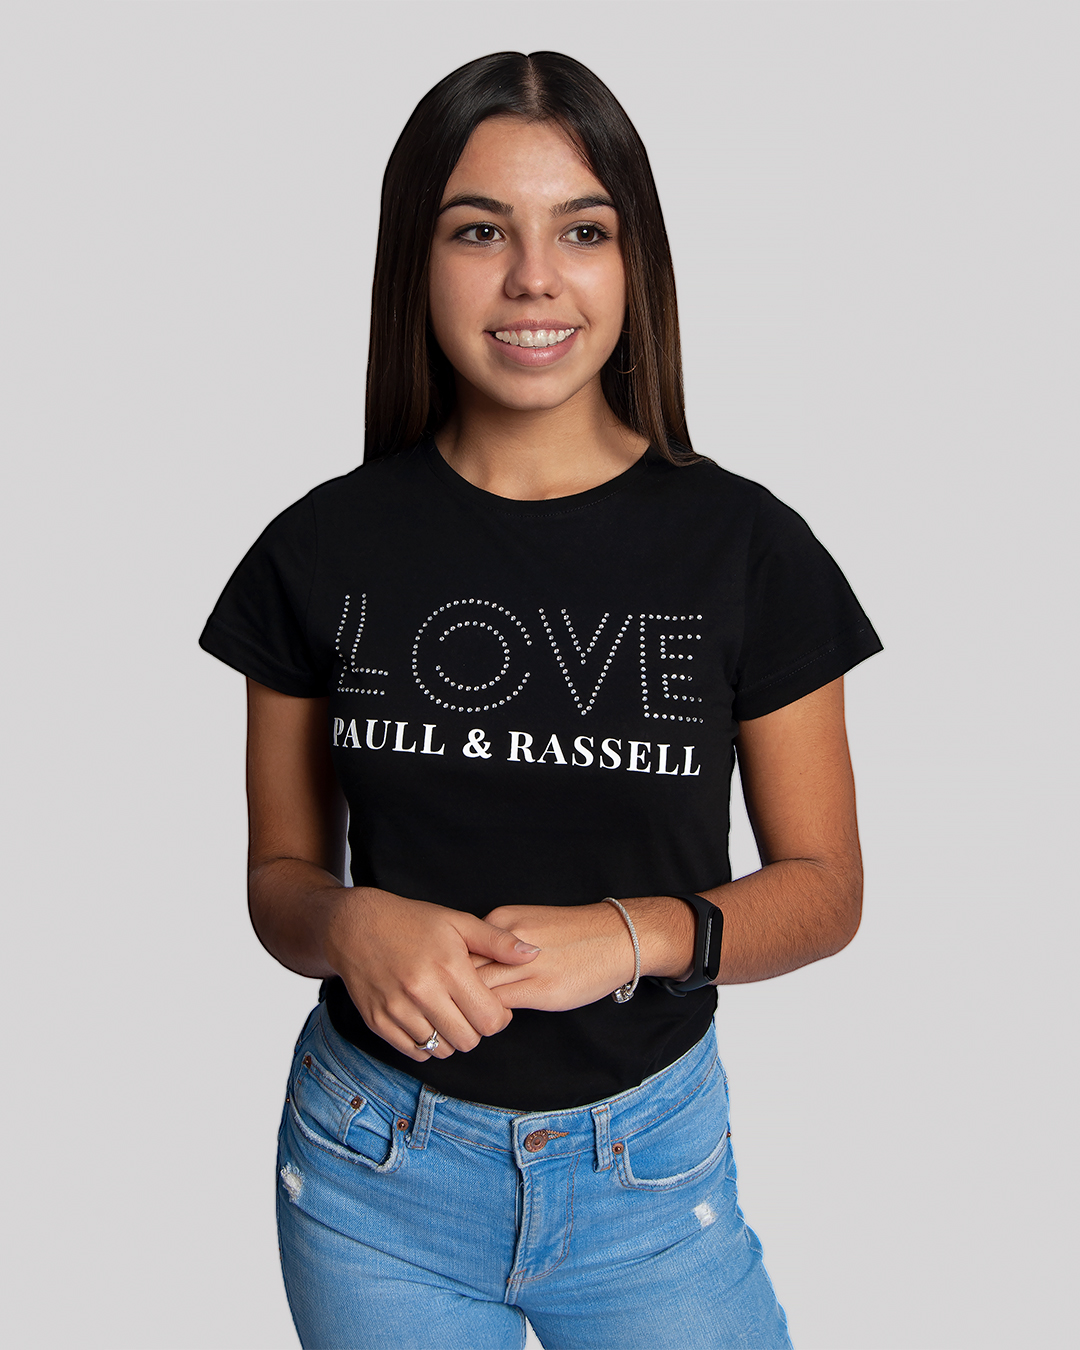 Paull Rassell Elite-Organic-T-Shirt 823 - Camiseta-elite Orgánica y ecoligica para-mujer - diamantes-de-cristal de-alta calidad incrustados